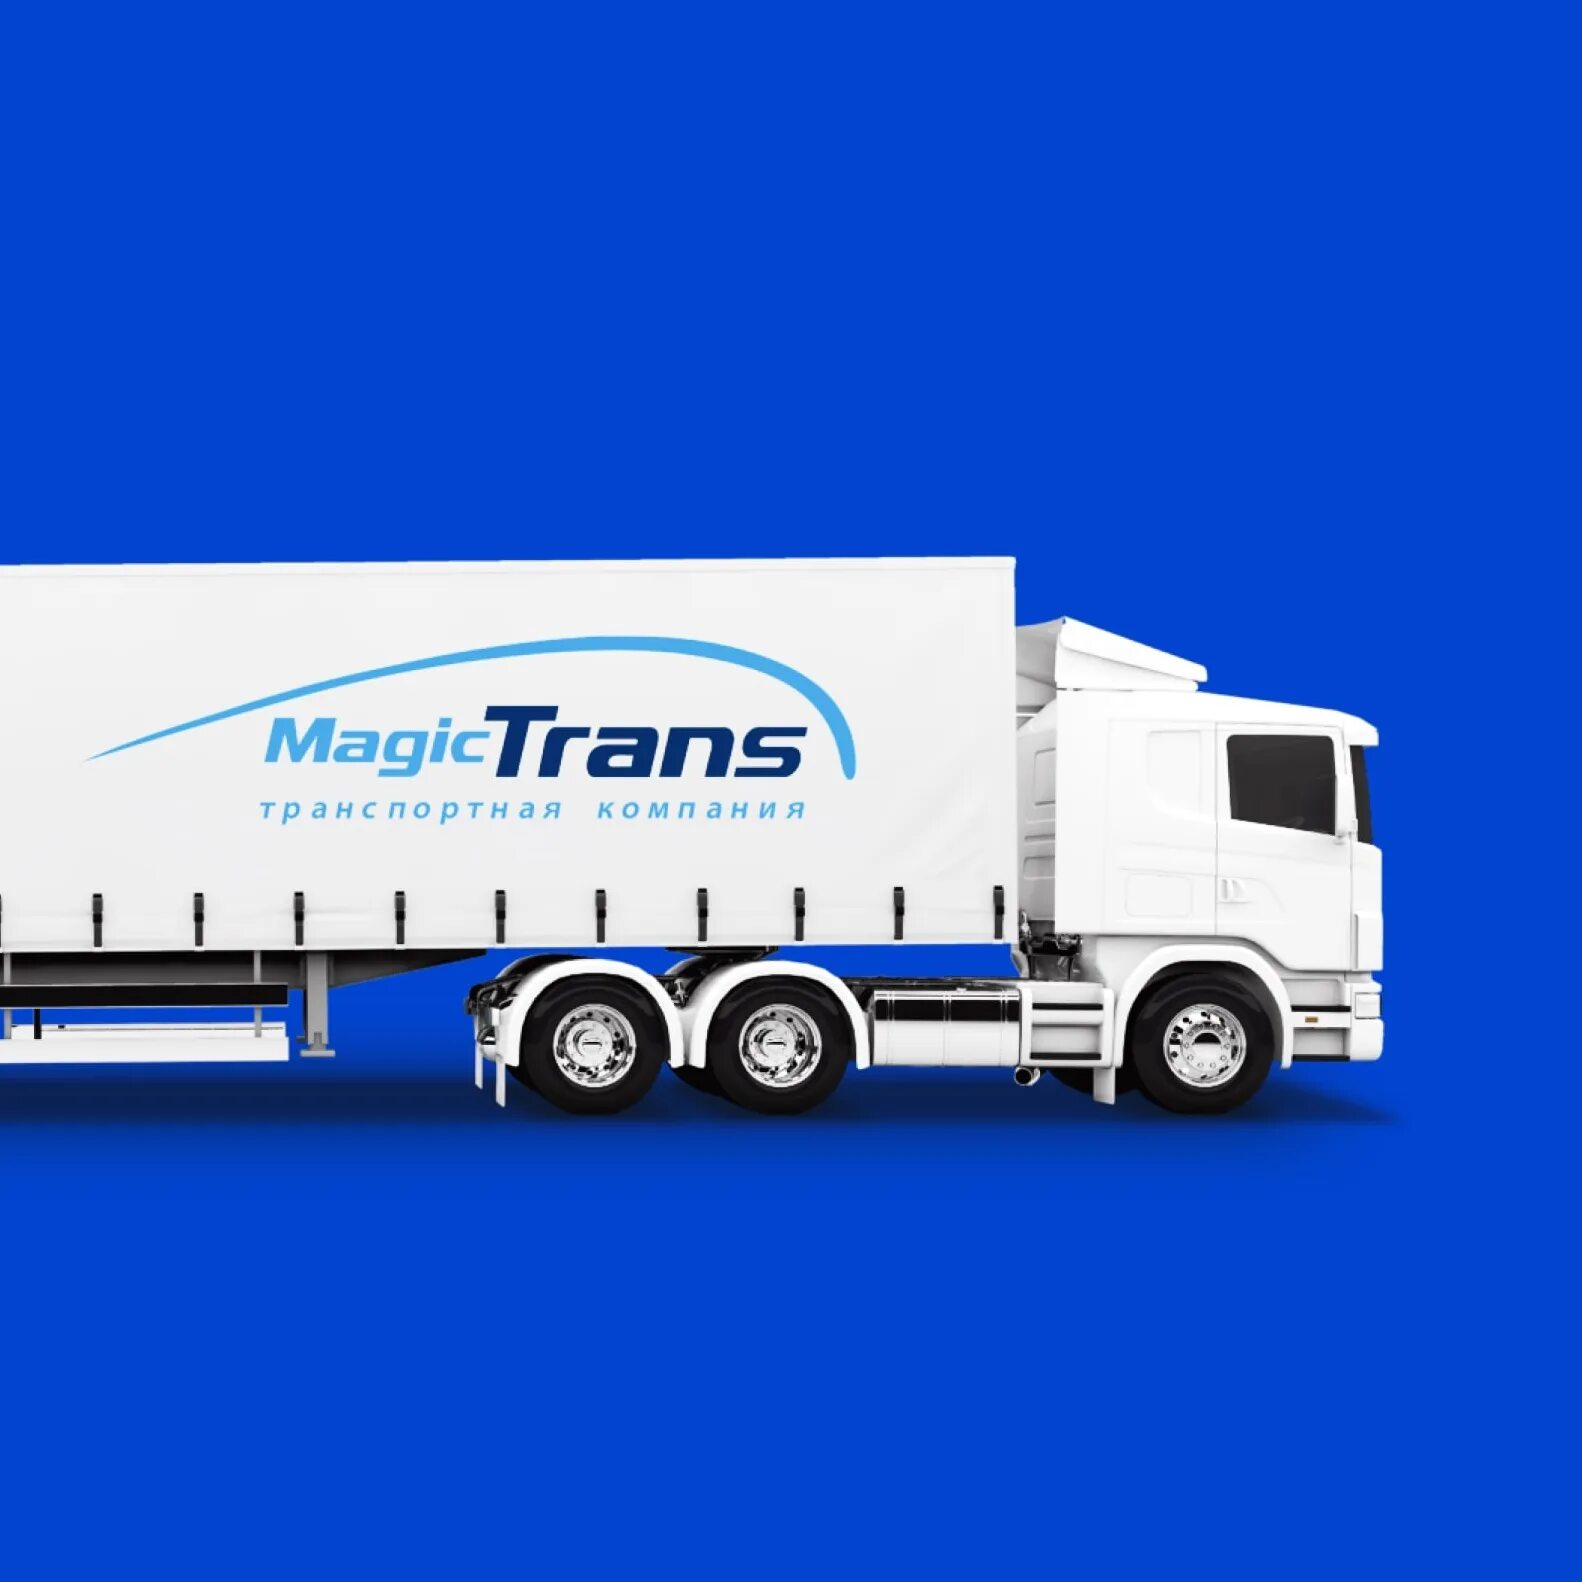 Компания magic trans. Транс транспортная компания. Мейджик транс. Magic Trans транспортная компания. Мейджик транс транспортная компания Москва.